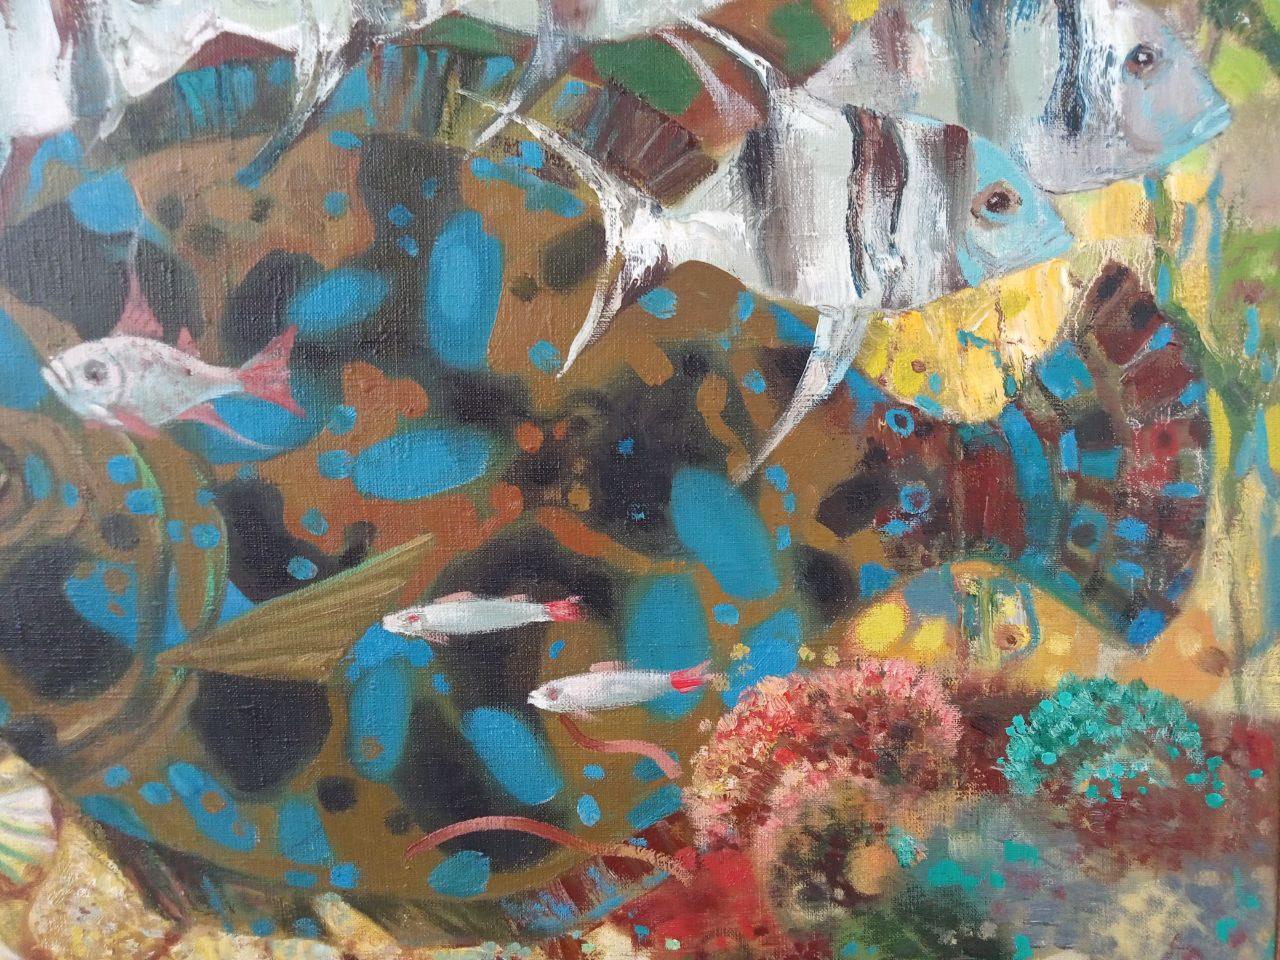 Artist: Anatoly Borisovich Tarabanov
Work: Original oil painting, handmade artwork, one of a kind 
Medium: Oil on Canvas 
Year: 2017
Style: Contemporary Art
Title: Big Fish
Size: 27.5